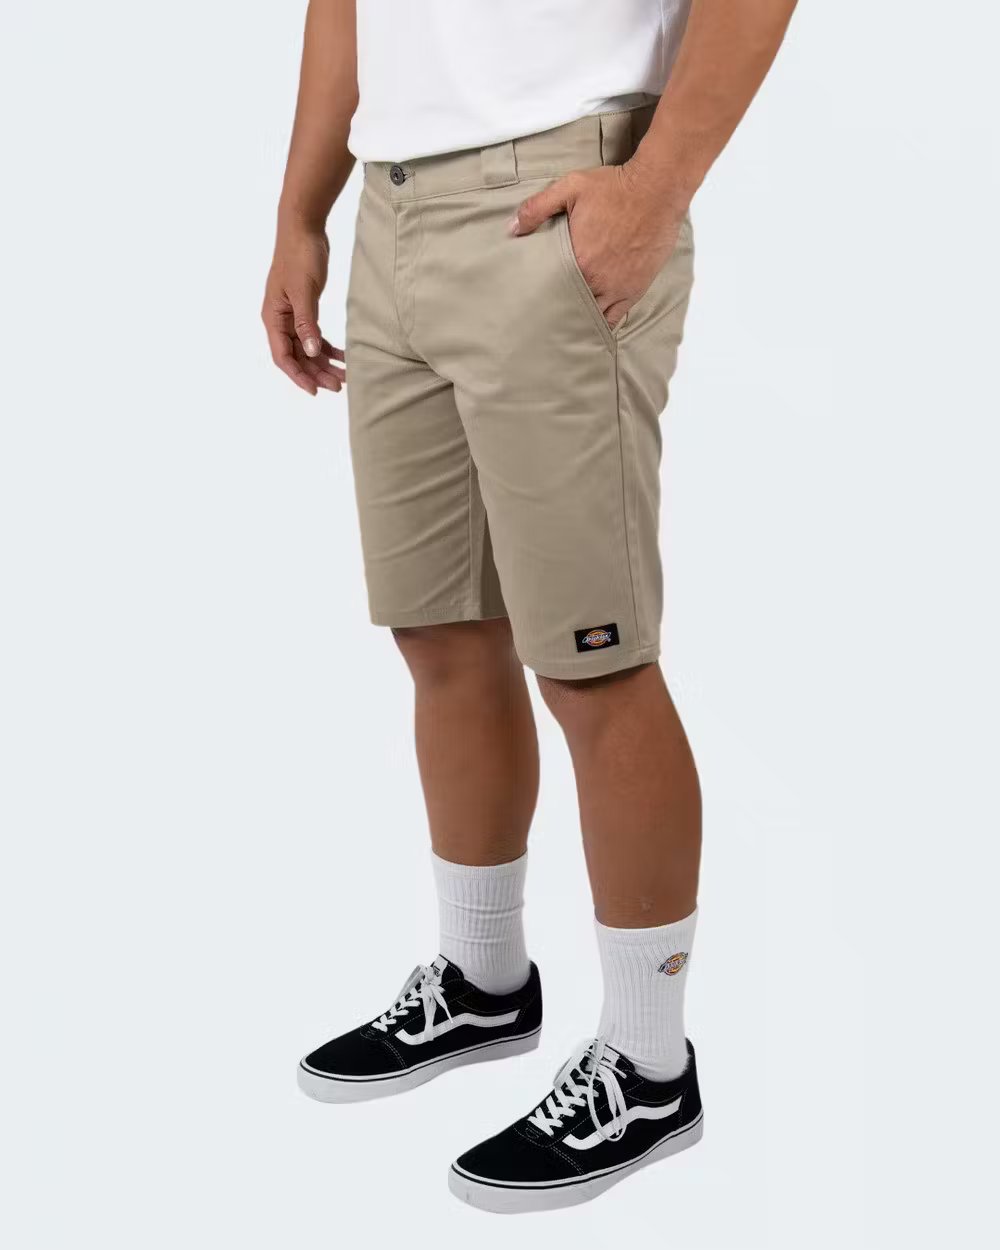 DICKIES 818 Slim Fit 10 Shorts - Desert Sand - VENUE.